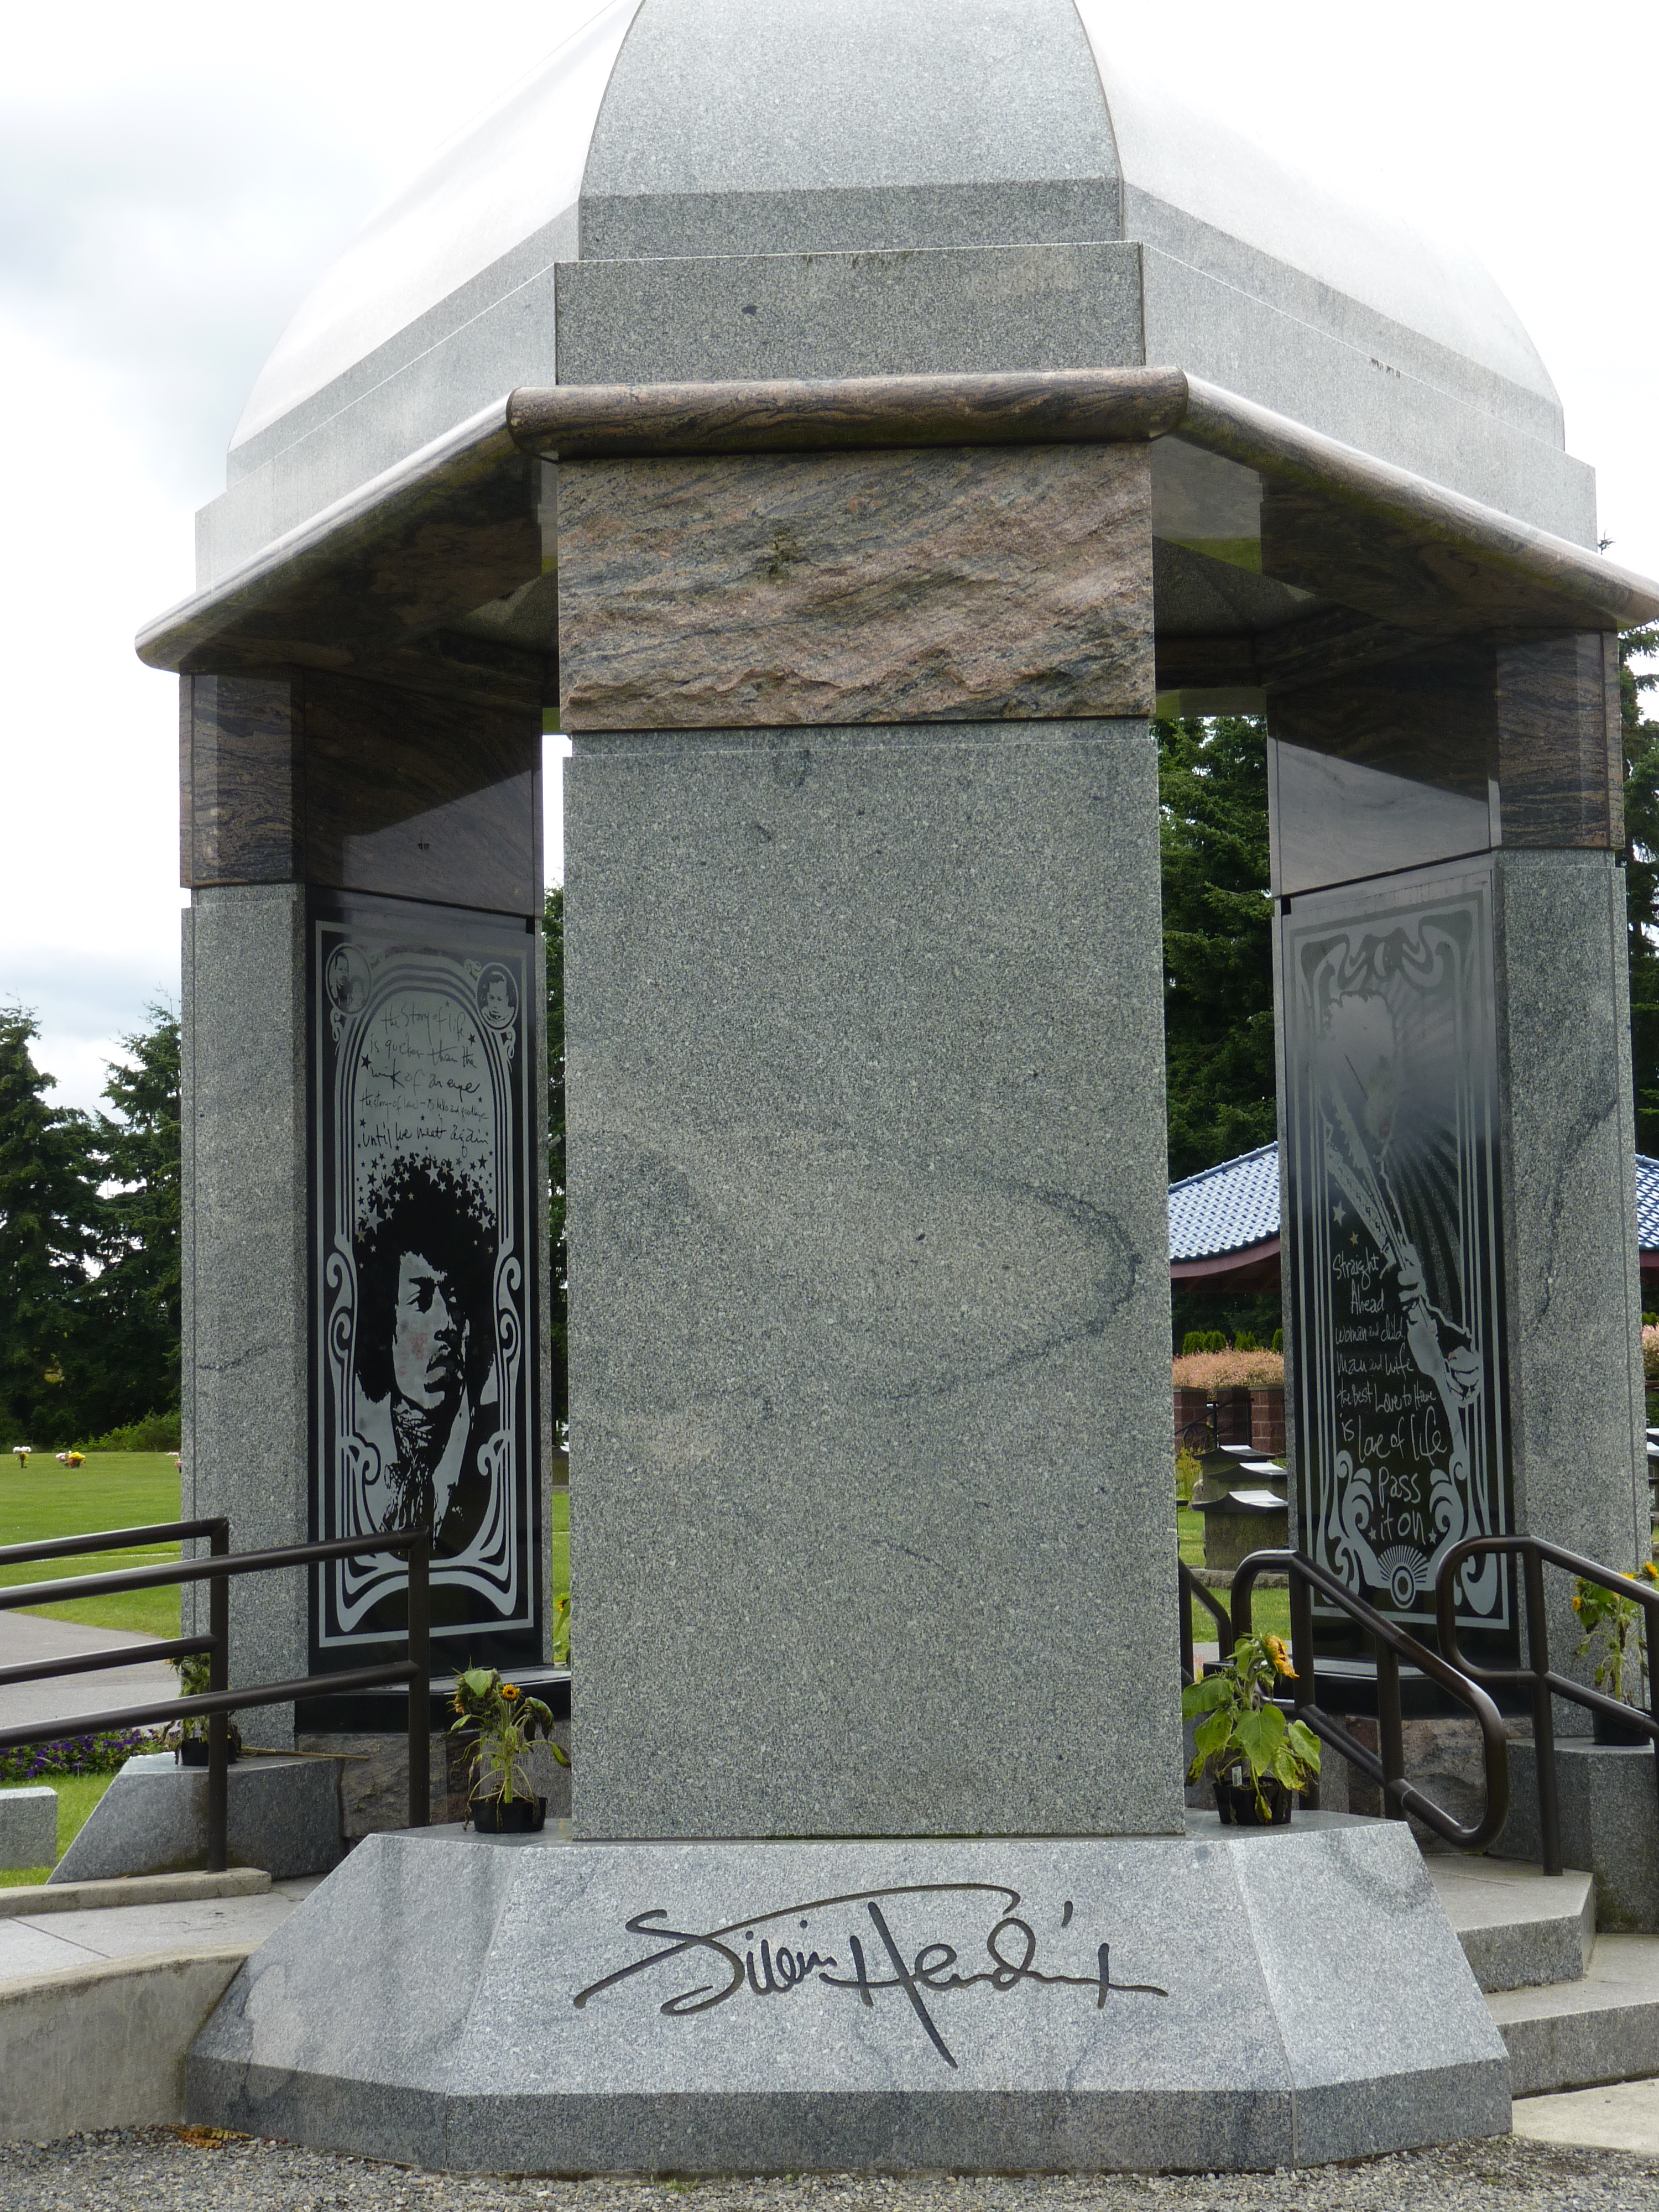 The Jimi Hendrix Memorial in Renton, WA